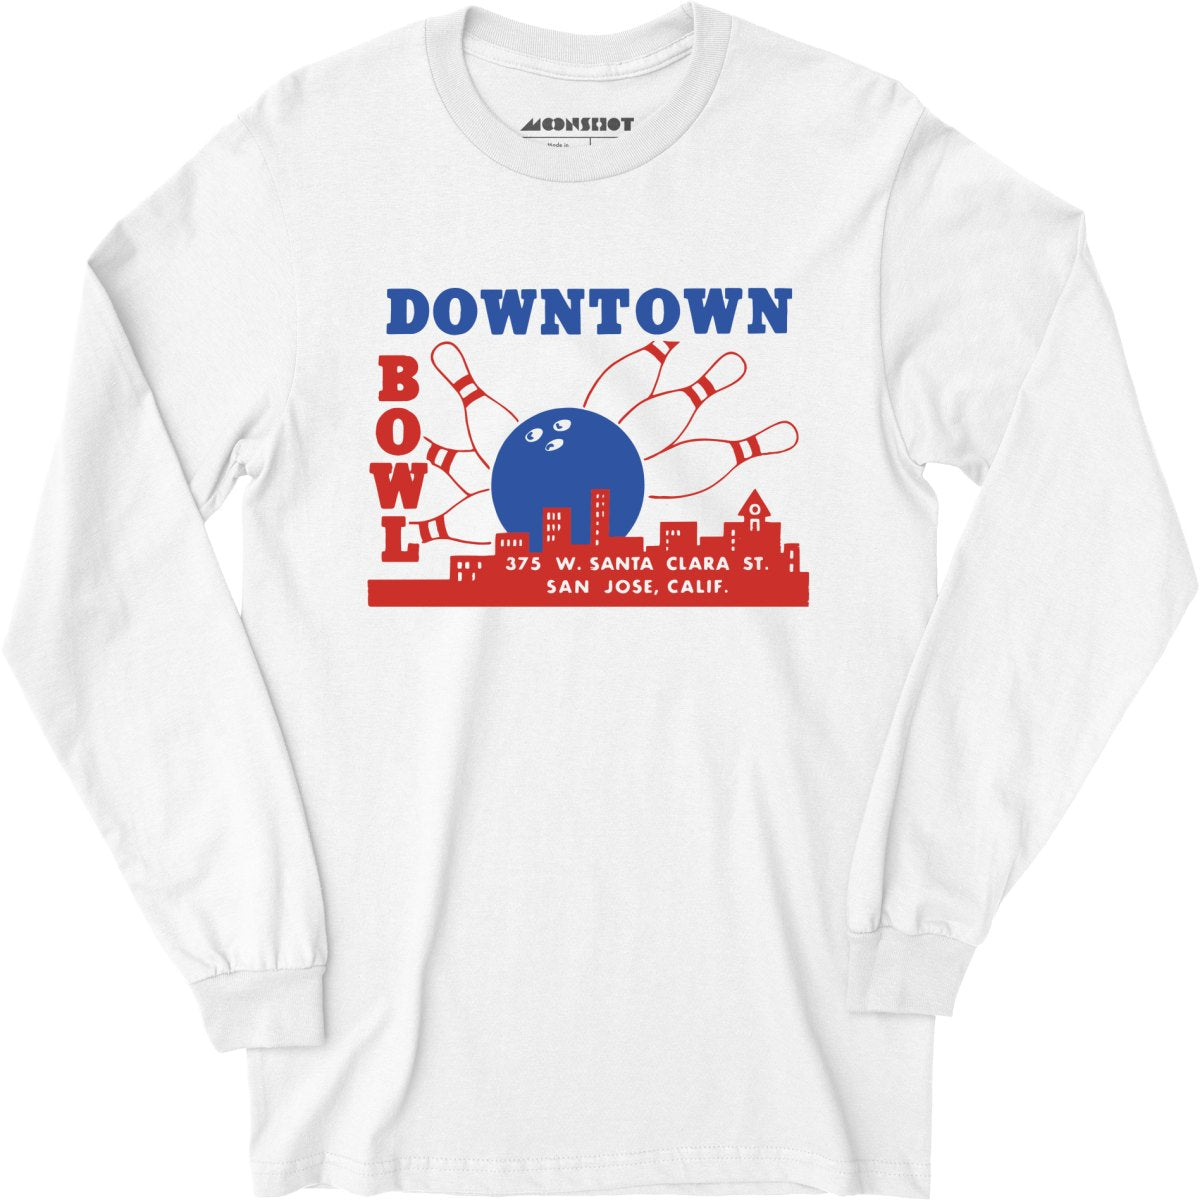 Downtown Bowl - San Jose, CA - Vintage Bowling Alley - Long Sleeve T-Shirt